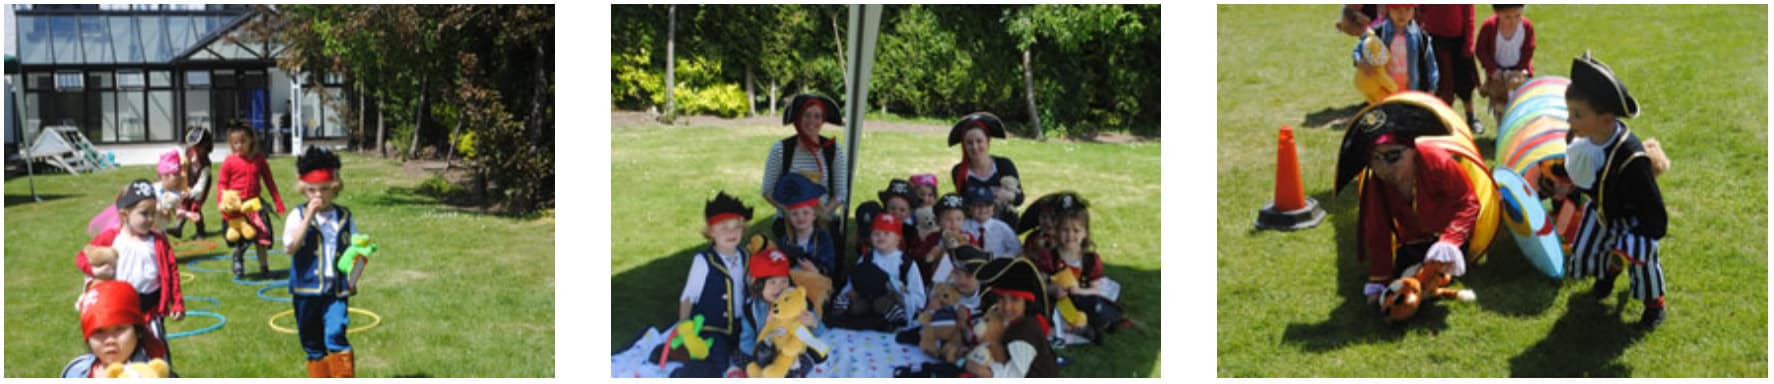 Fairholme Preparatory School: A Pirate's Life for Kindergarten